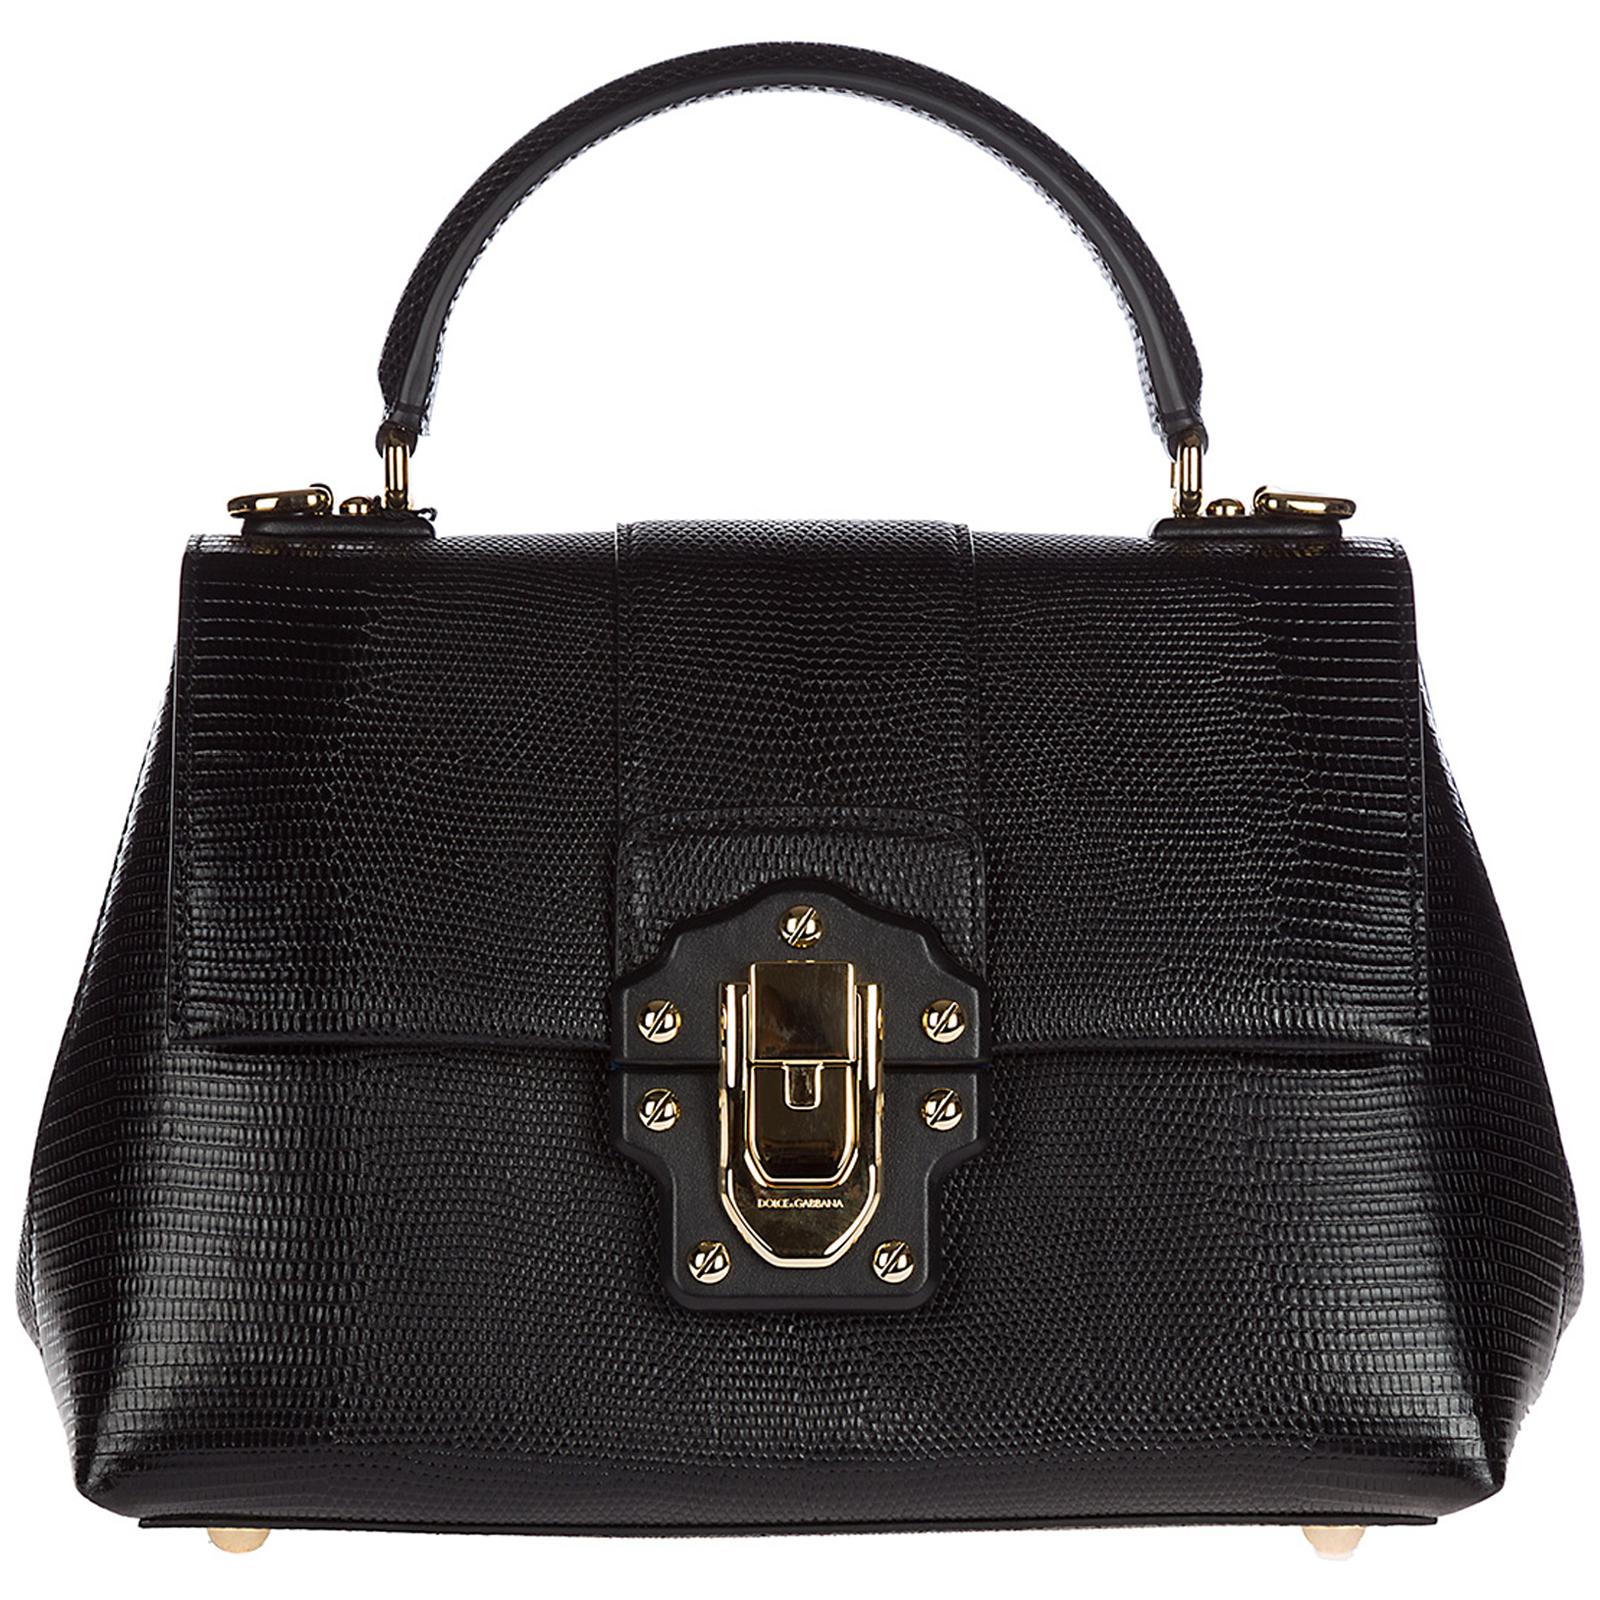 Dolce & Gabbana Leather Lucia Tote Bag in Nero (Black) - Lyst